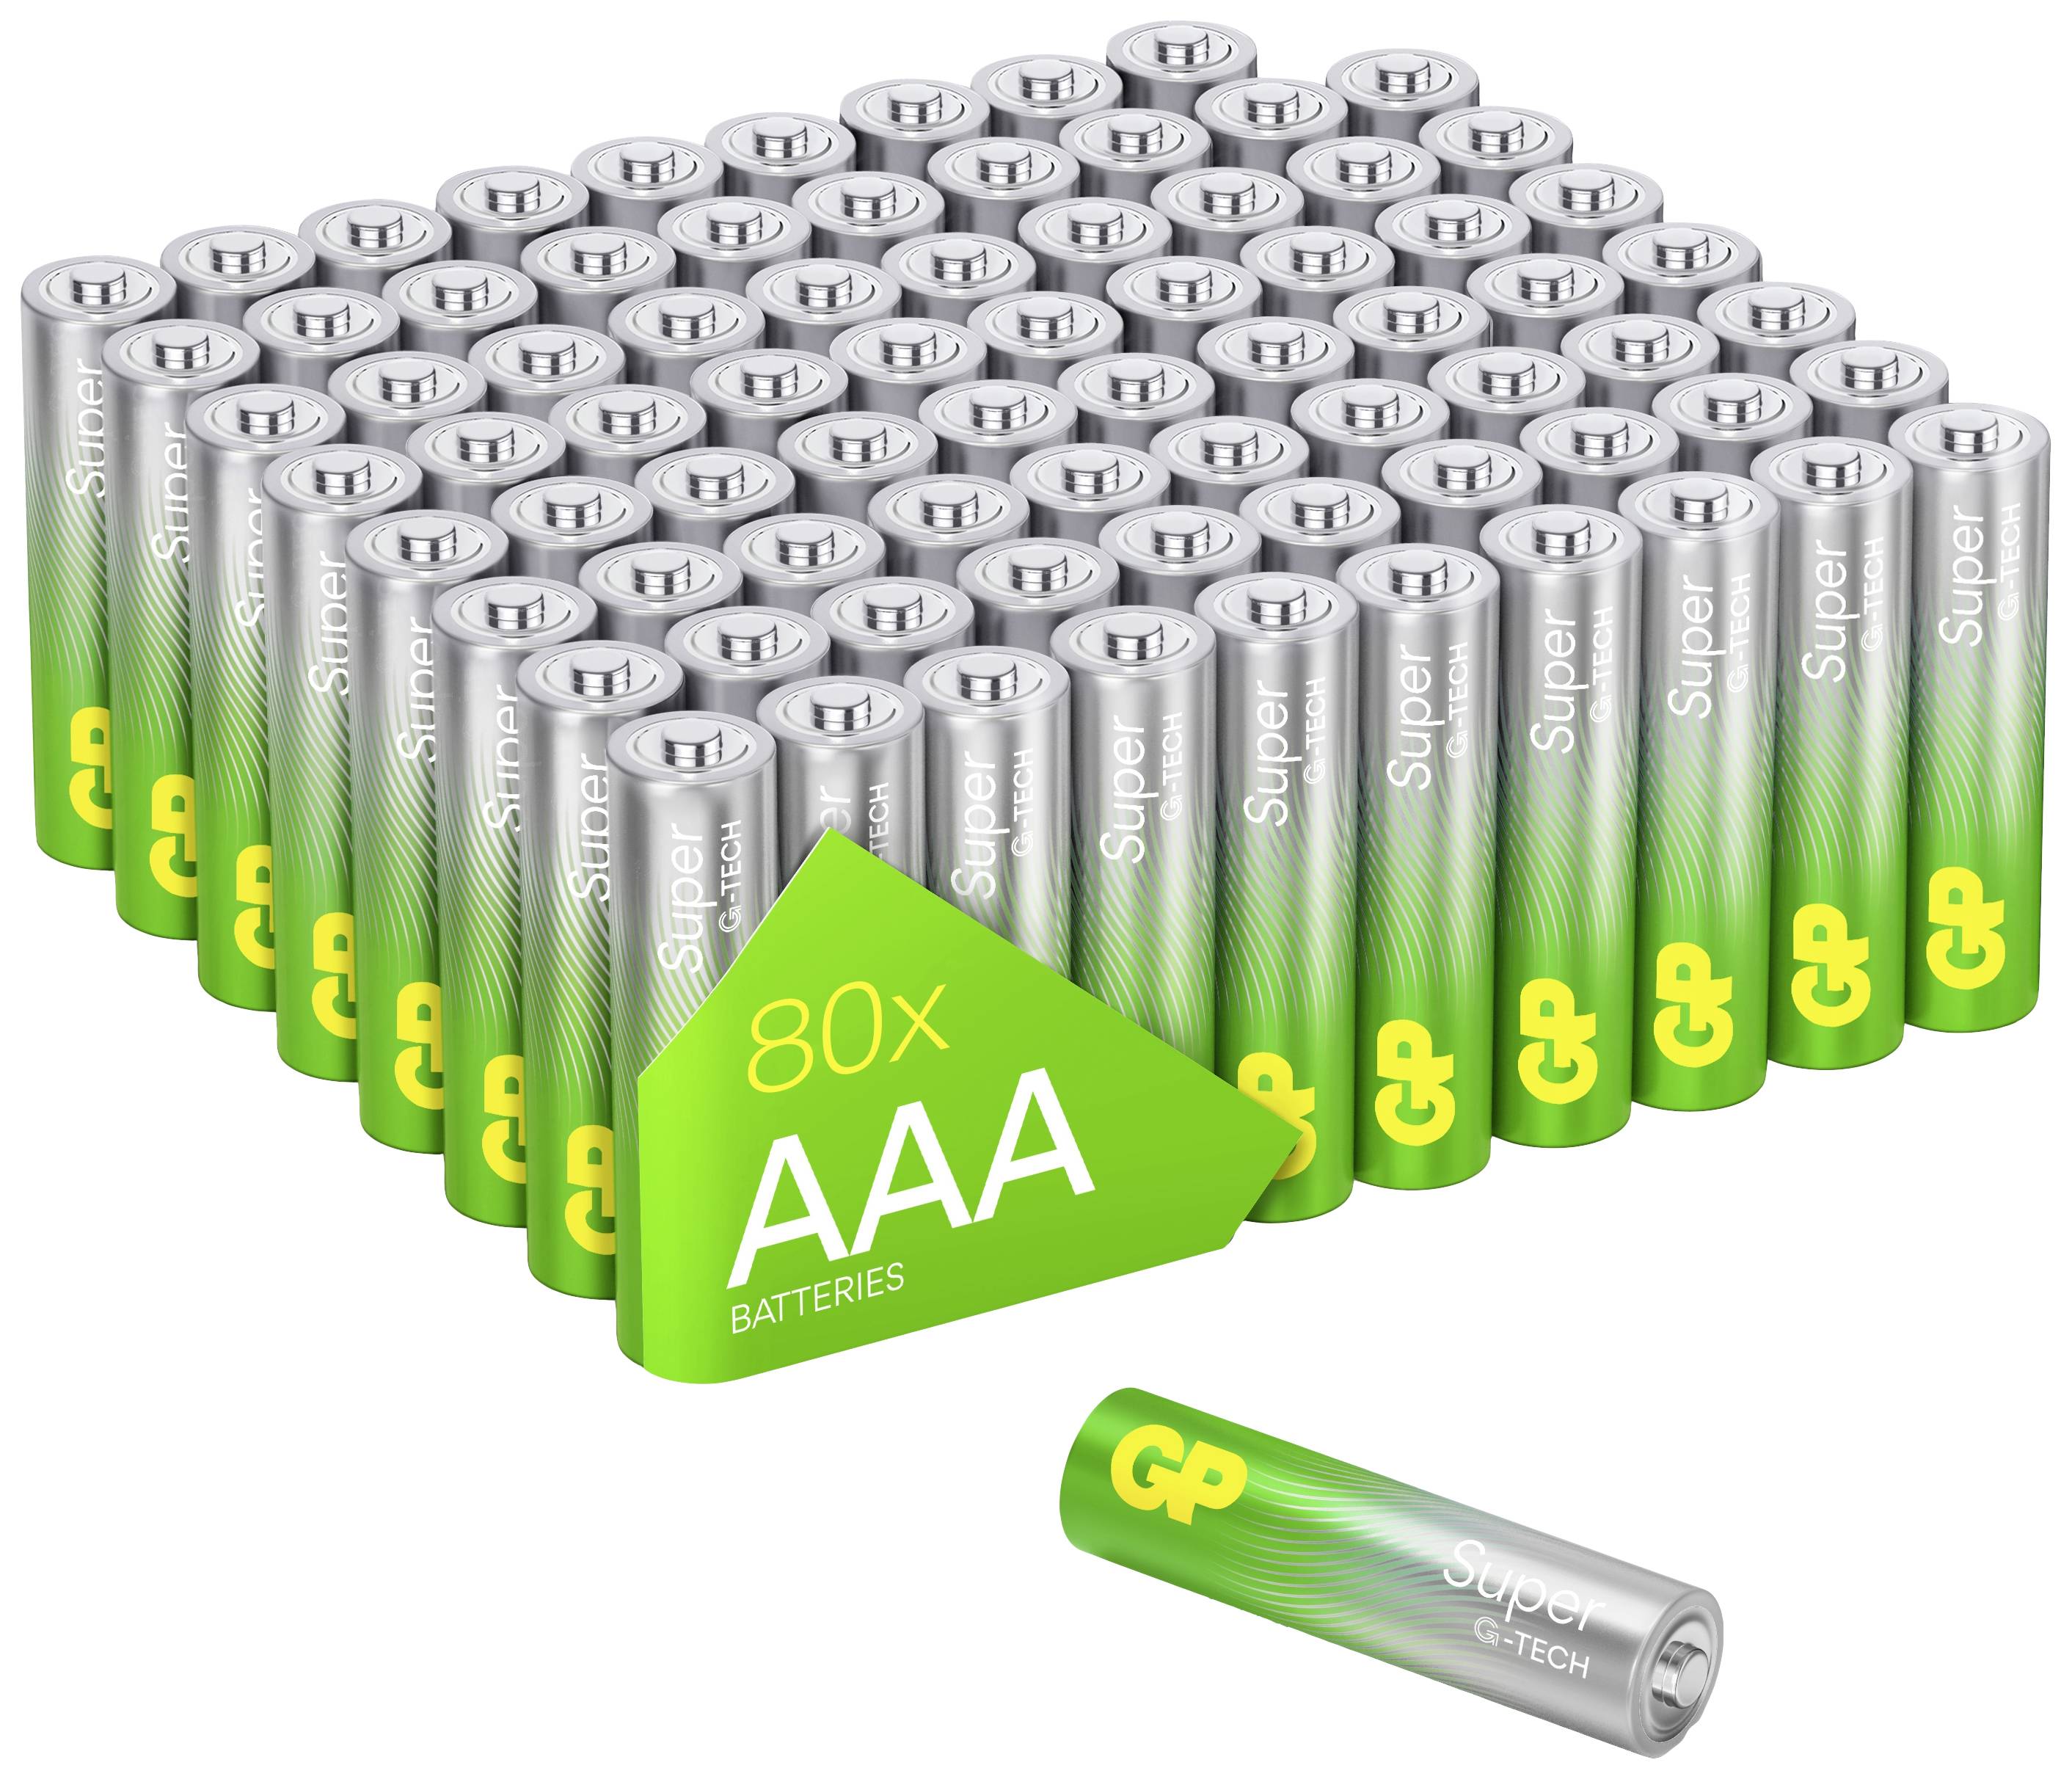 Gp batteries super. Батарейки GP G-Tech AAA. Соло -ААА: 1,5v Alkaline 30 %. GP super Alkaline Battery. GP батарейки Мадагаскара.